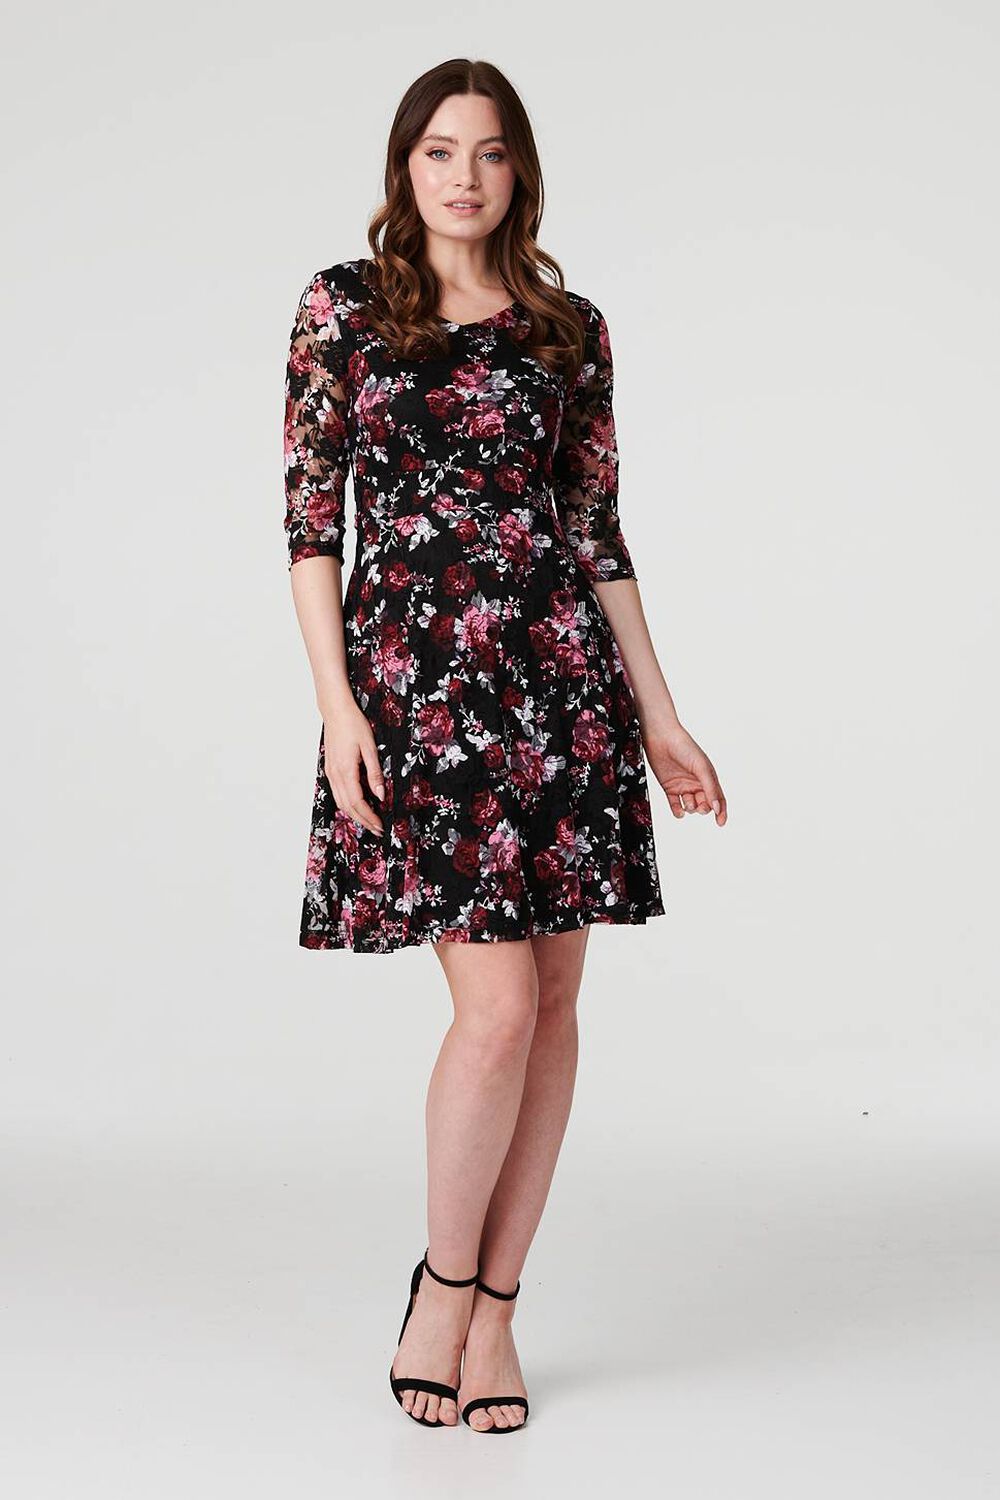 Izabel London Red - Rose Print Lace Overlay Short Dress, Size: 18